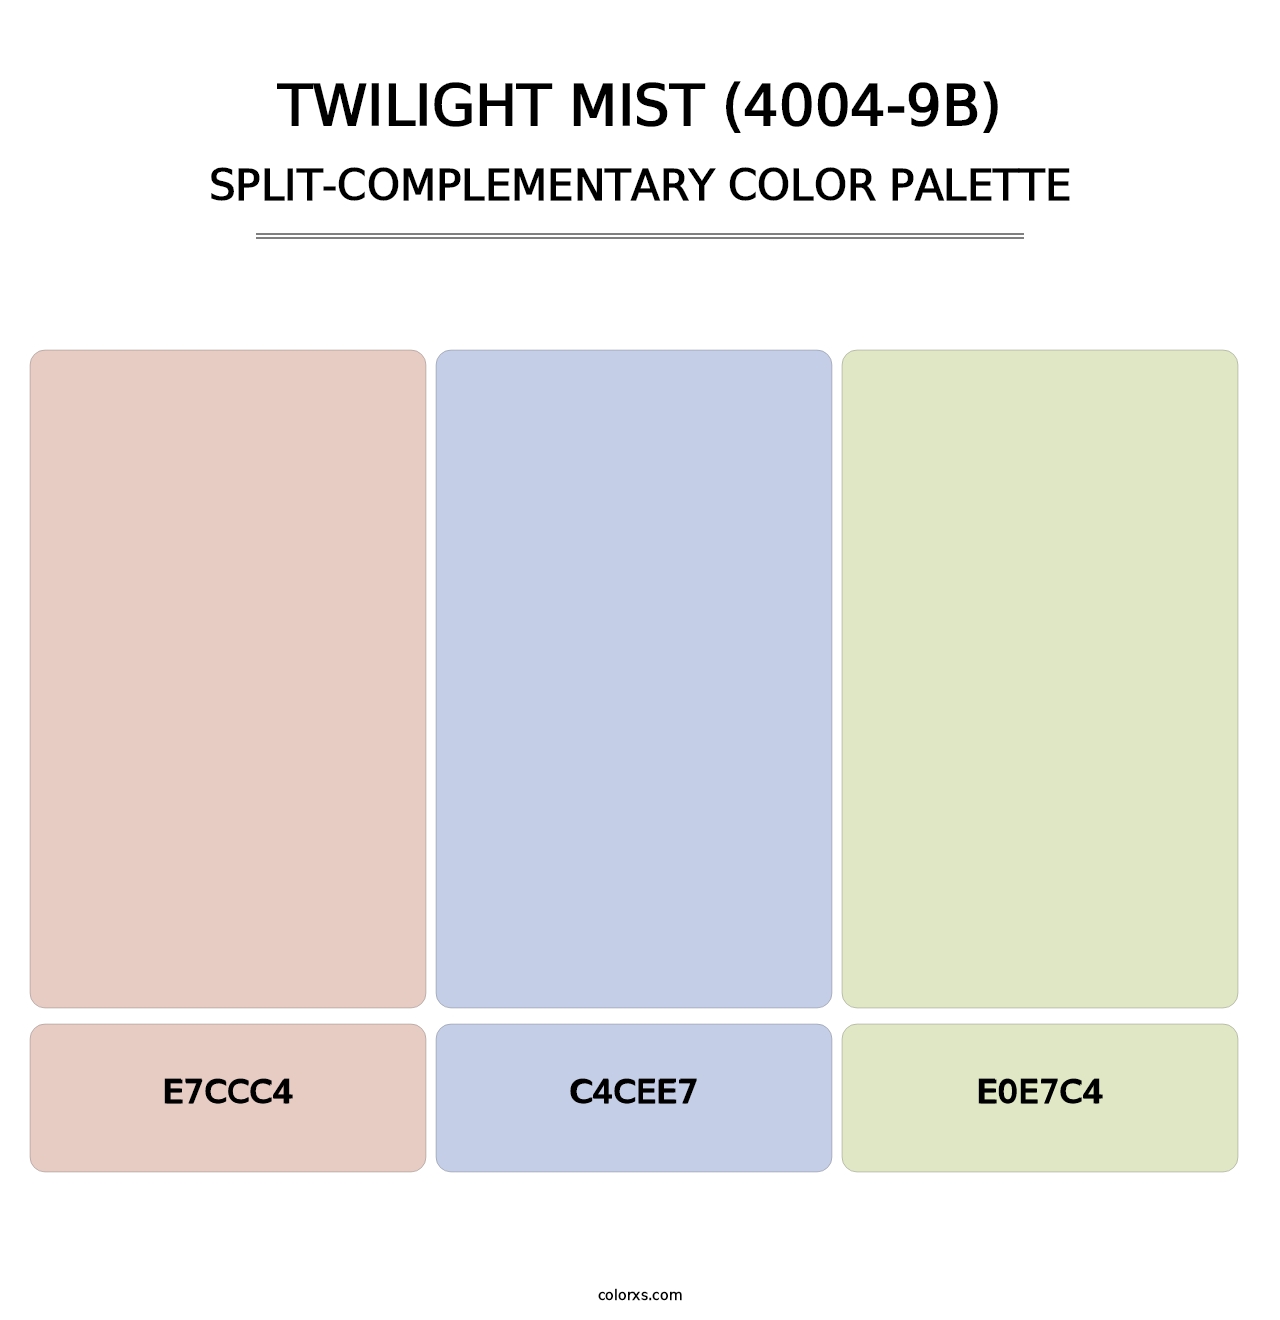 Twilight Mist (4004-9B) - Split-Complementary Color Palette